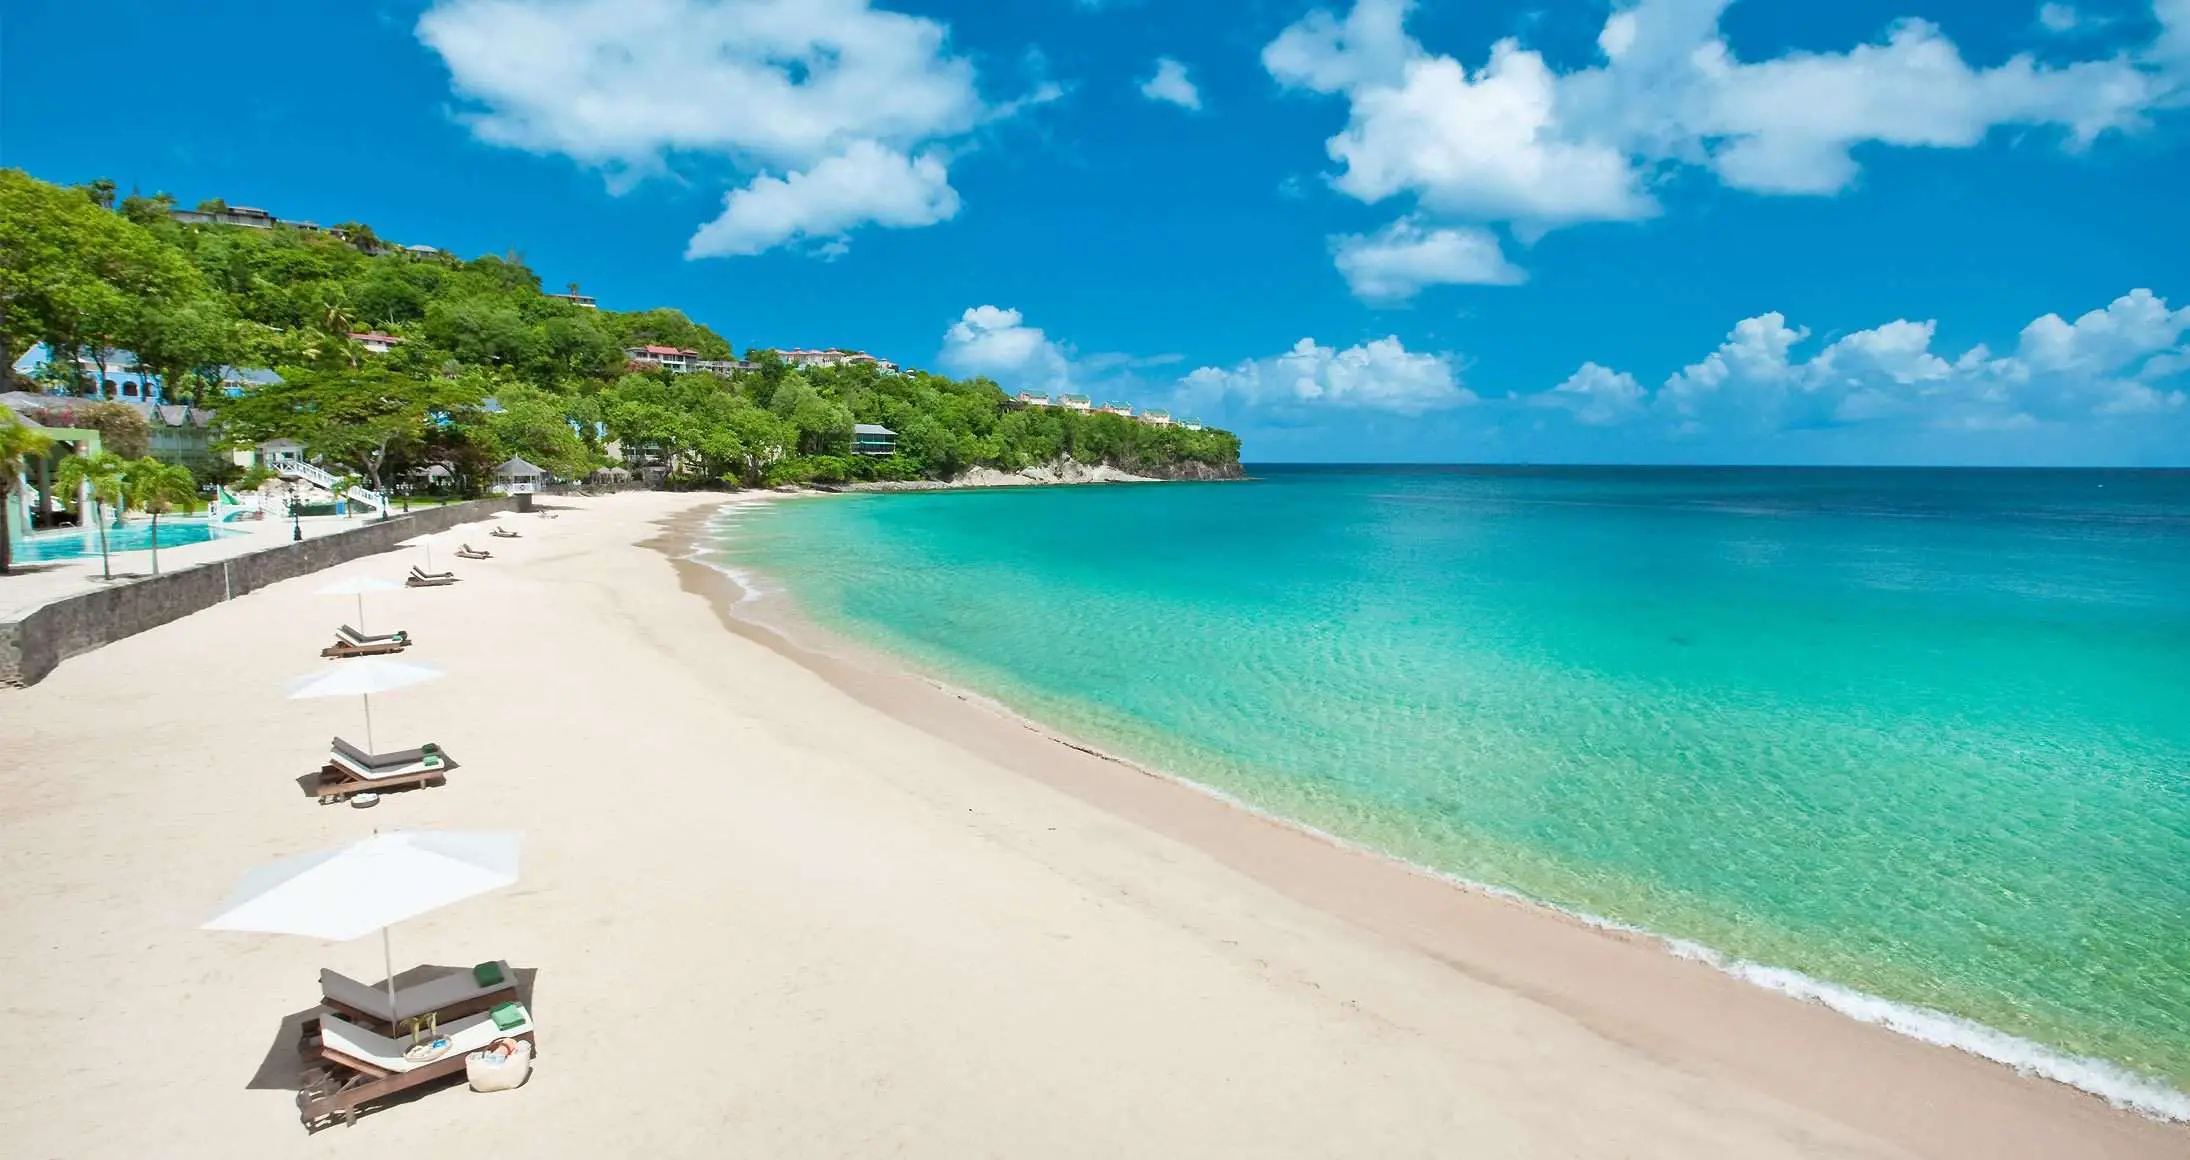 Sandals Regency La Toc Luxury Resort in Castries, St. Lucia